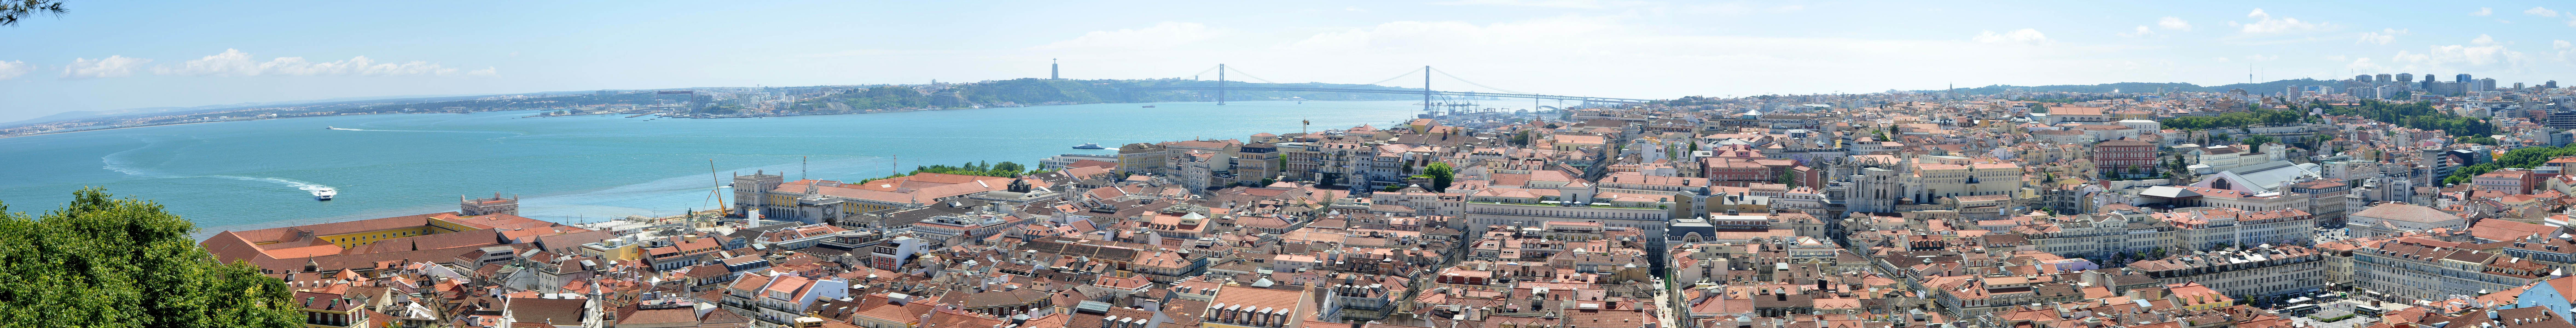 Lisbon - Portugal3.jpg